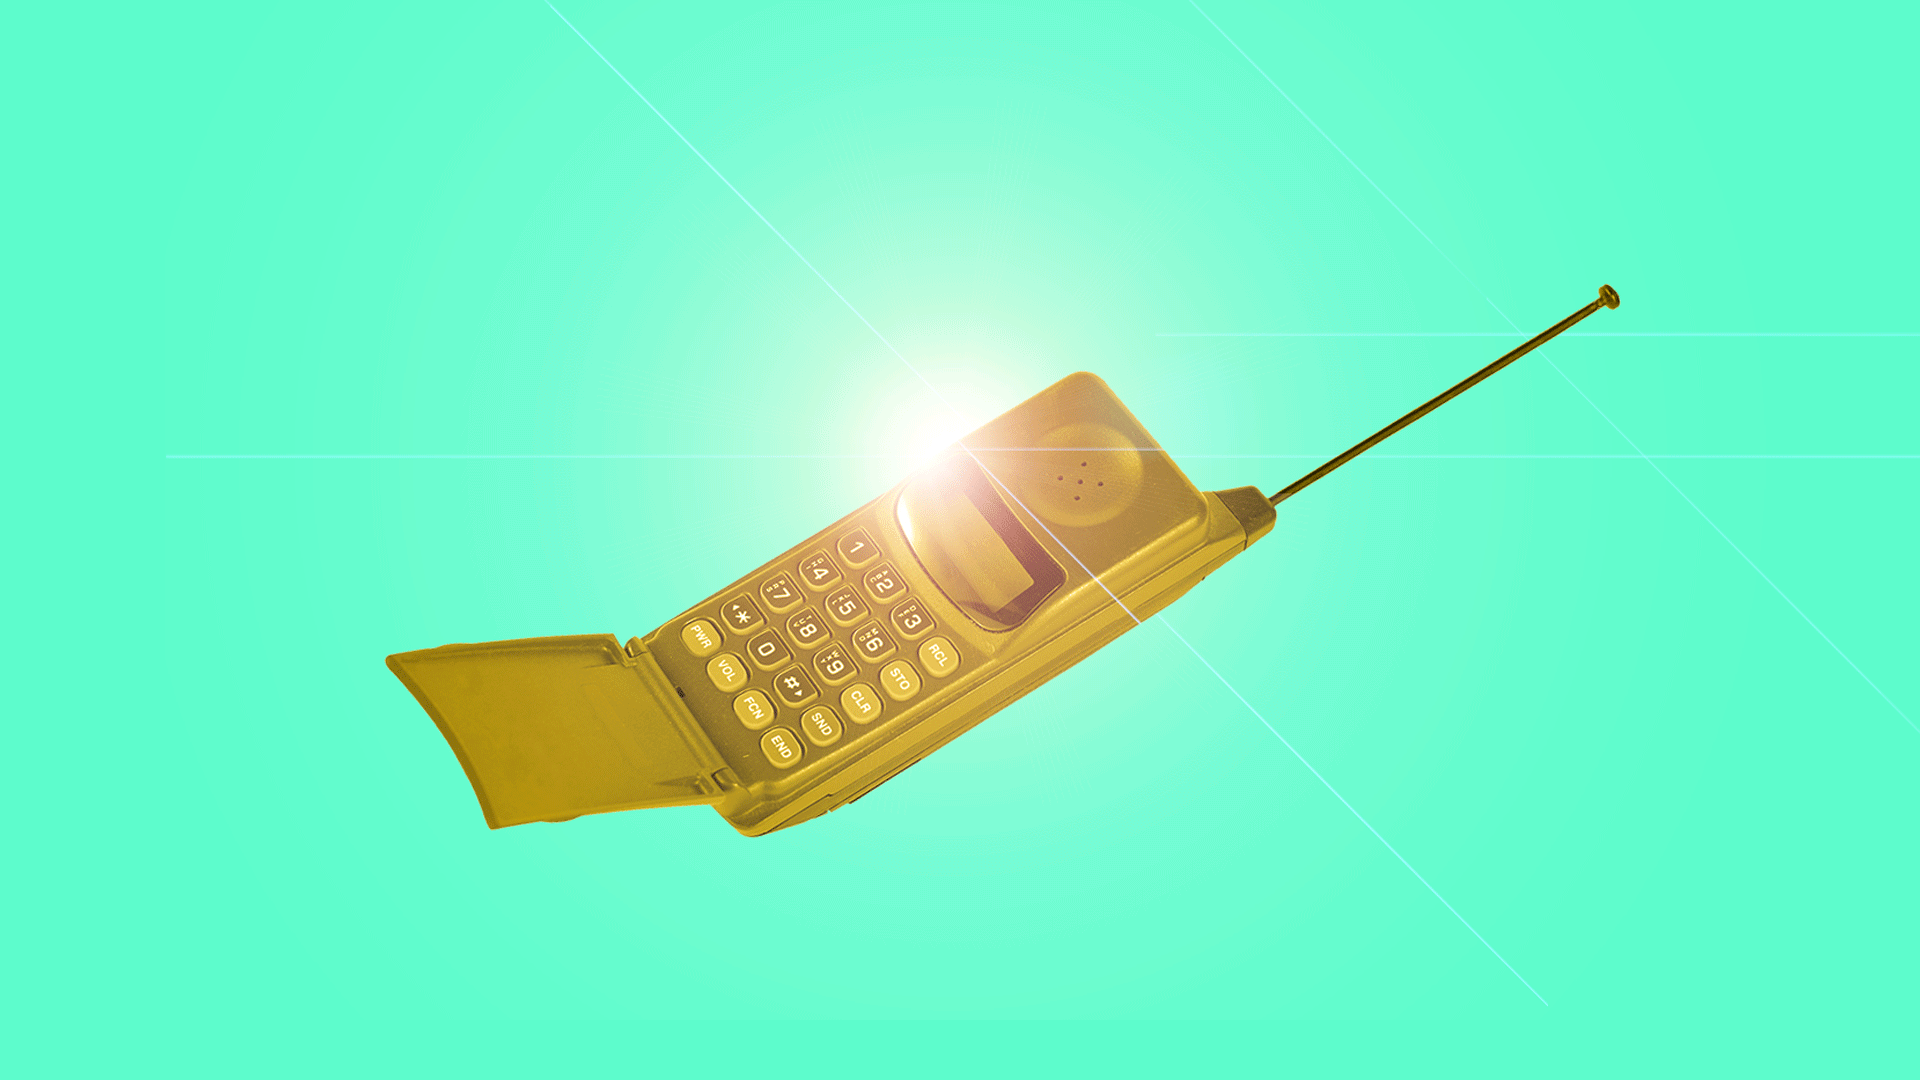 Gold bar cell phone